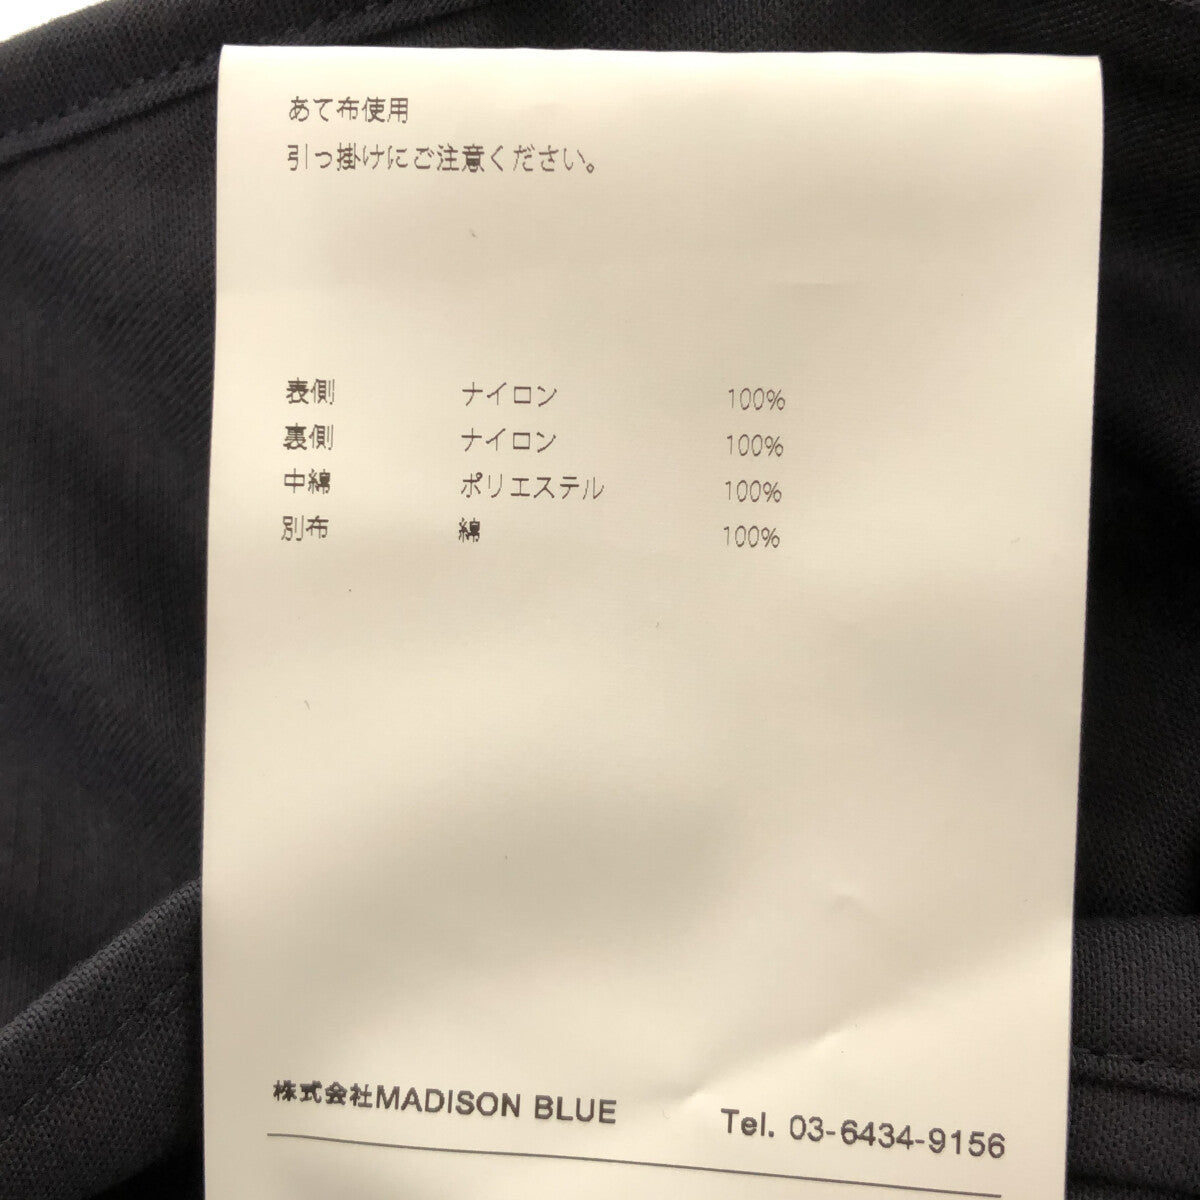 MADISON BLUE / マディソンブルー | HELLO ライナー キルティング